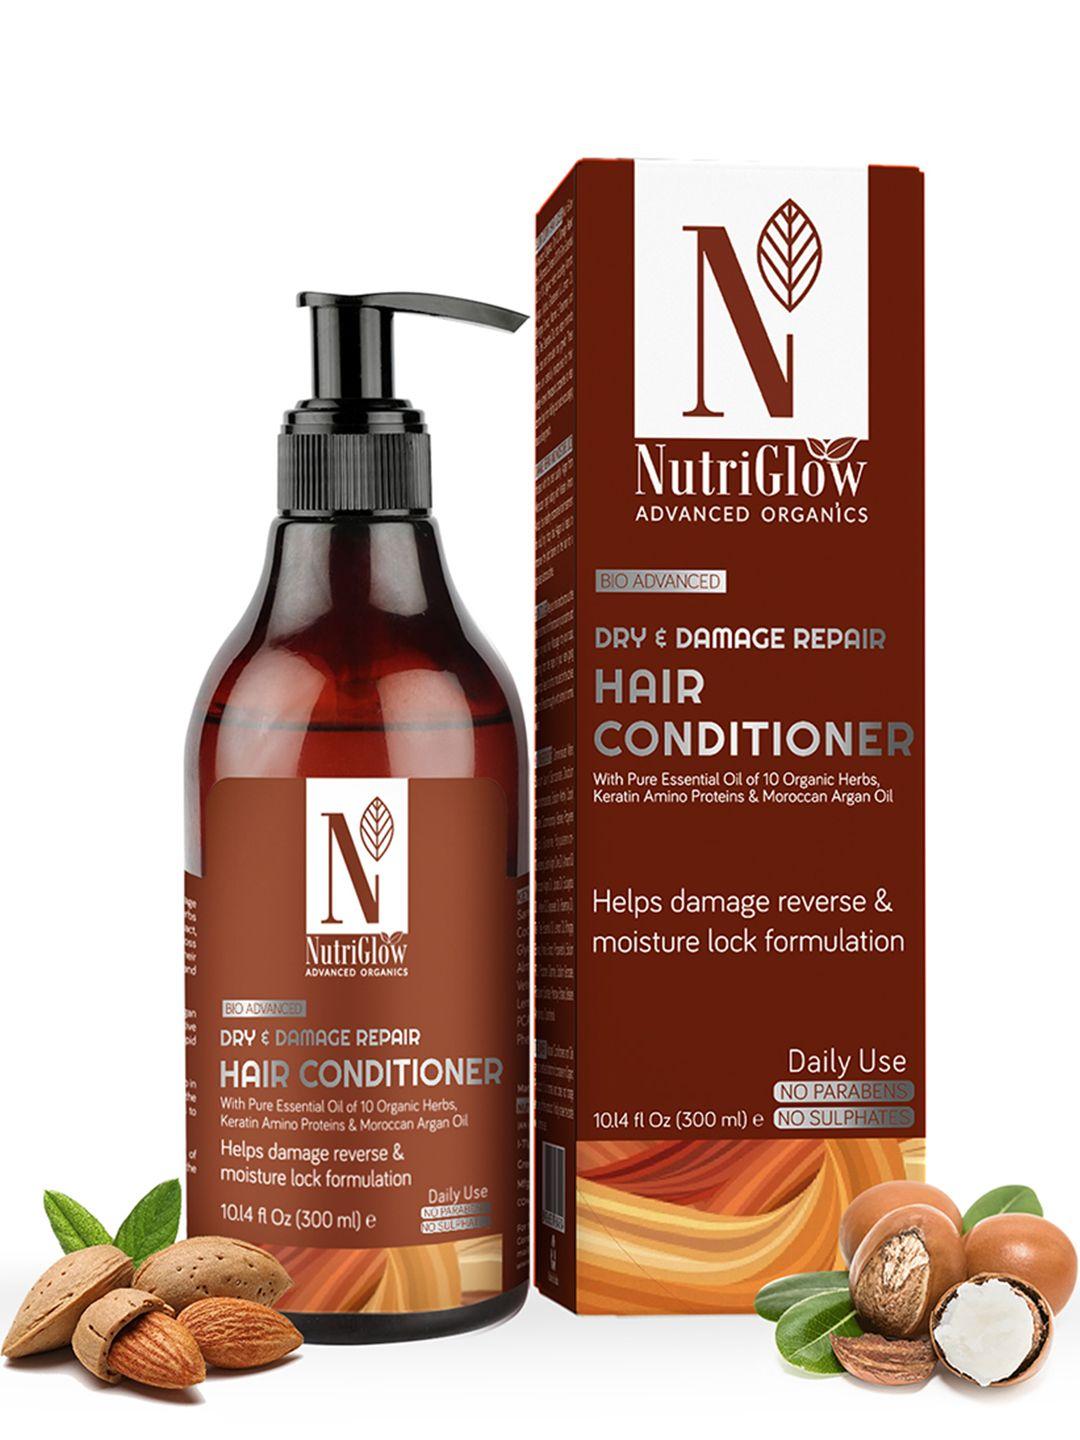 NutriGlow Advanced Organics Sustainable Bio Daily Use Dry-damage Repair Hair Conditioner 300 ml